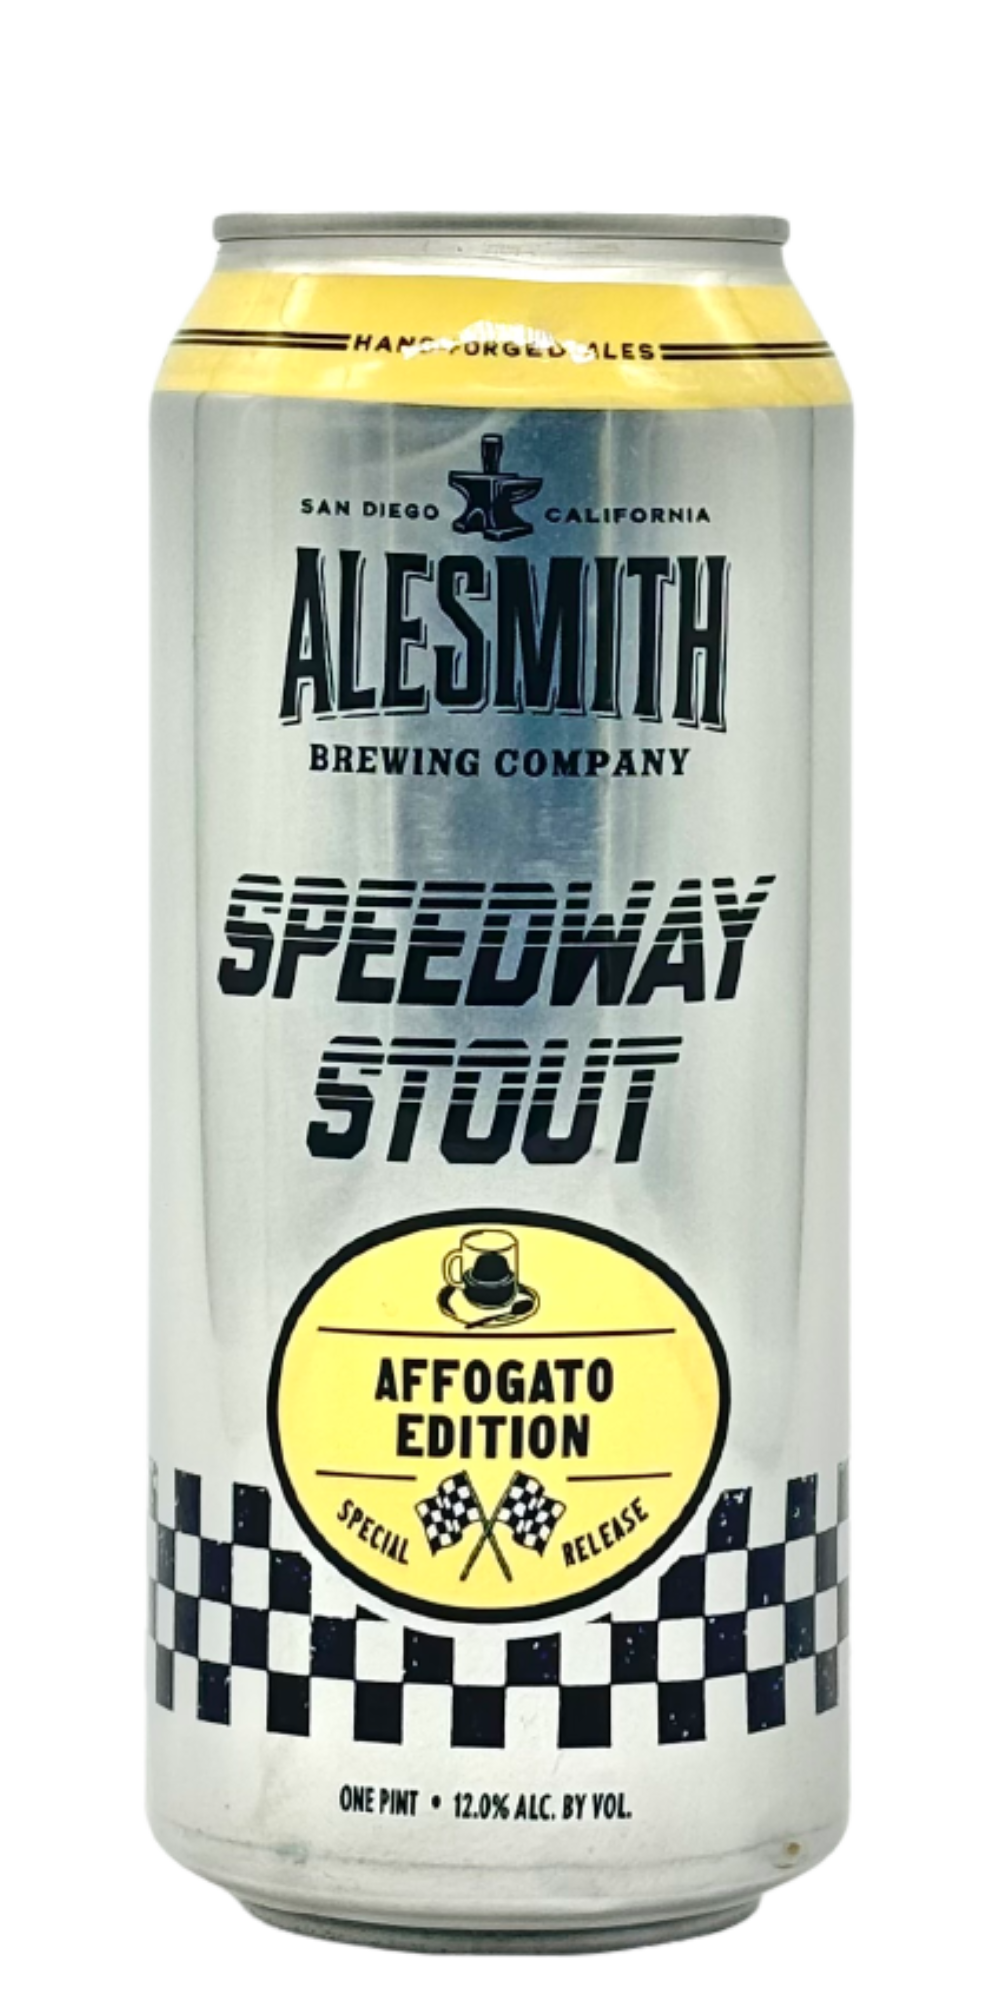 Alesmith - Speedway Stout - Affogato Edition